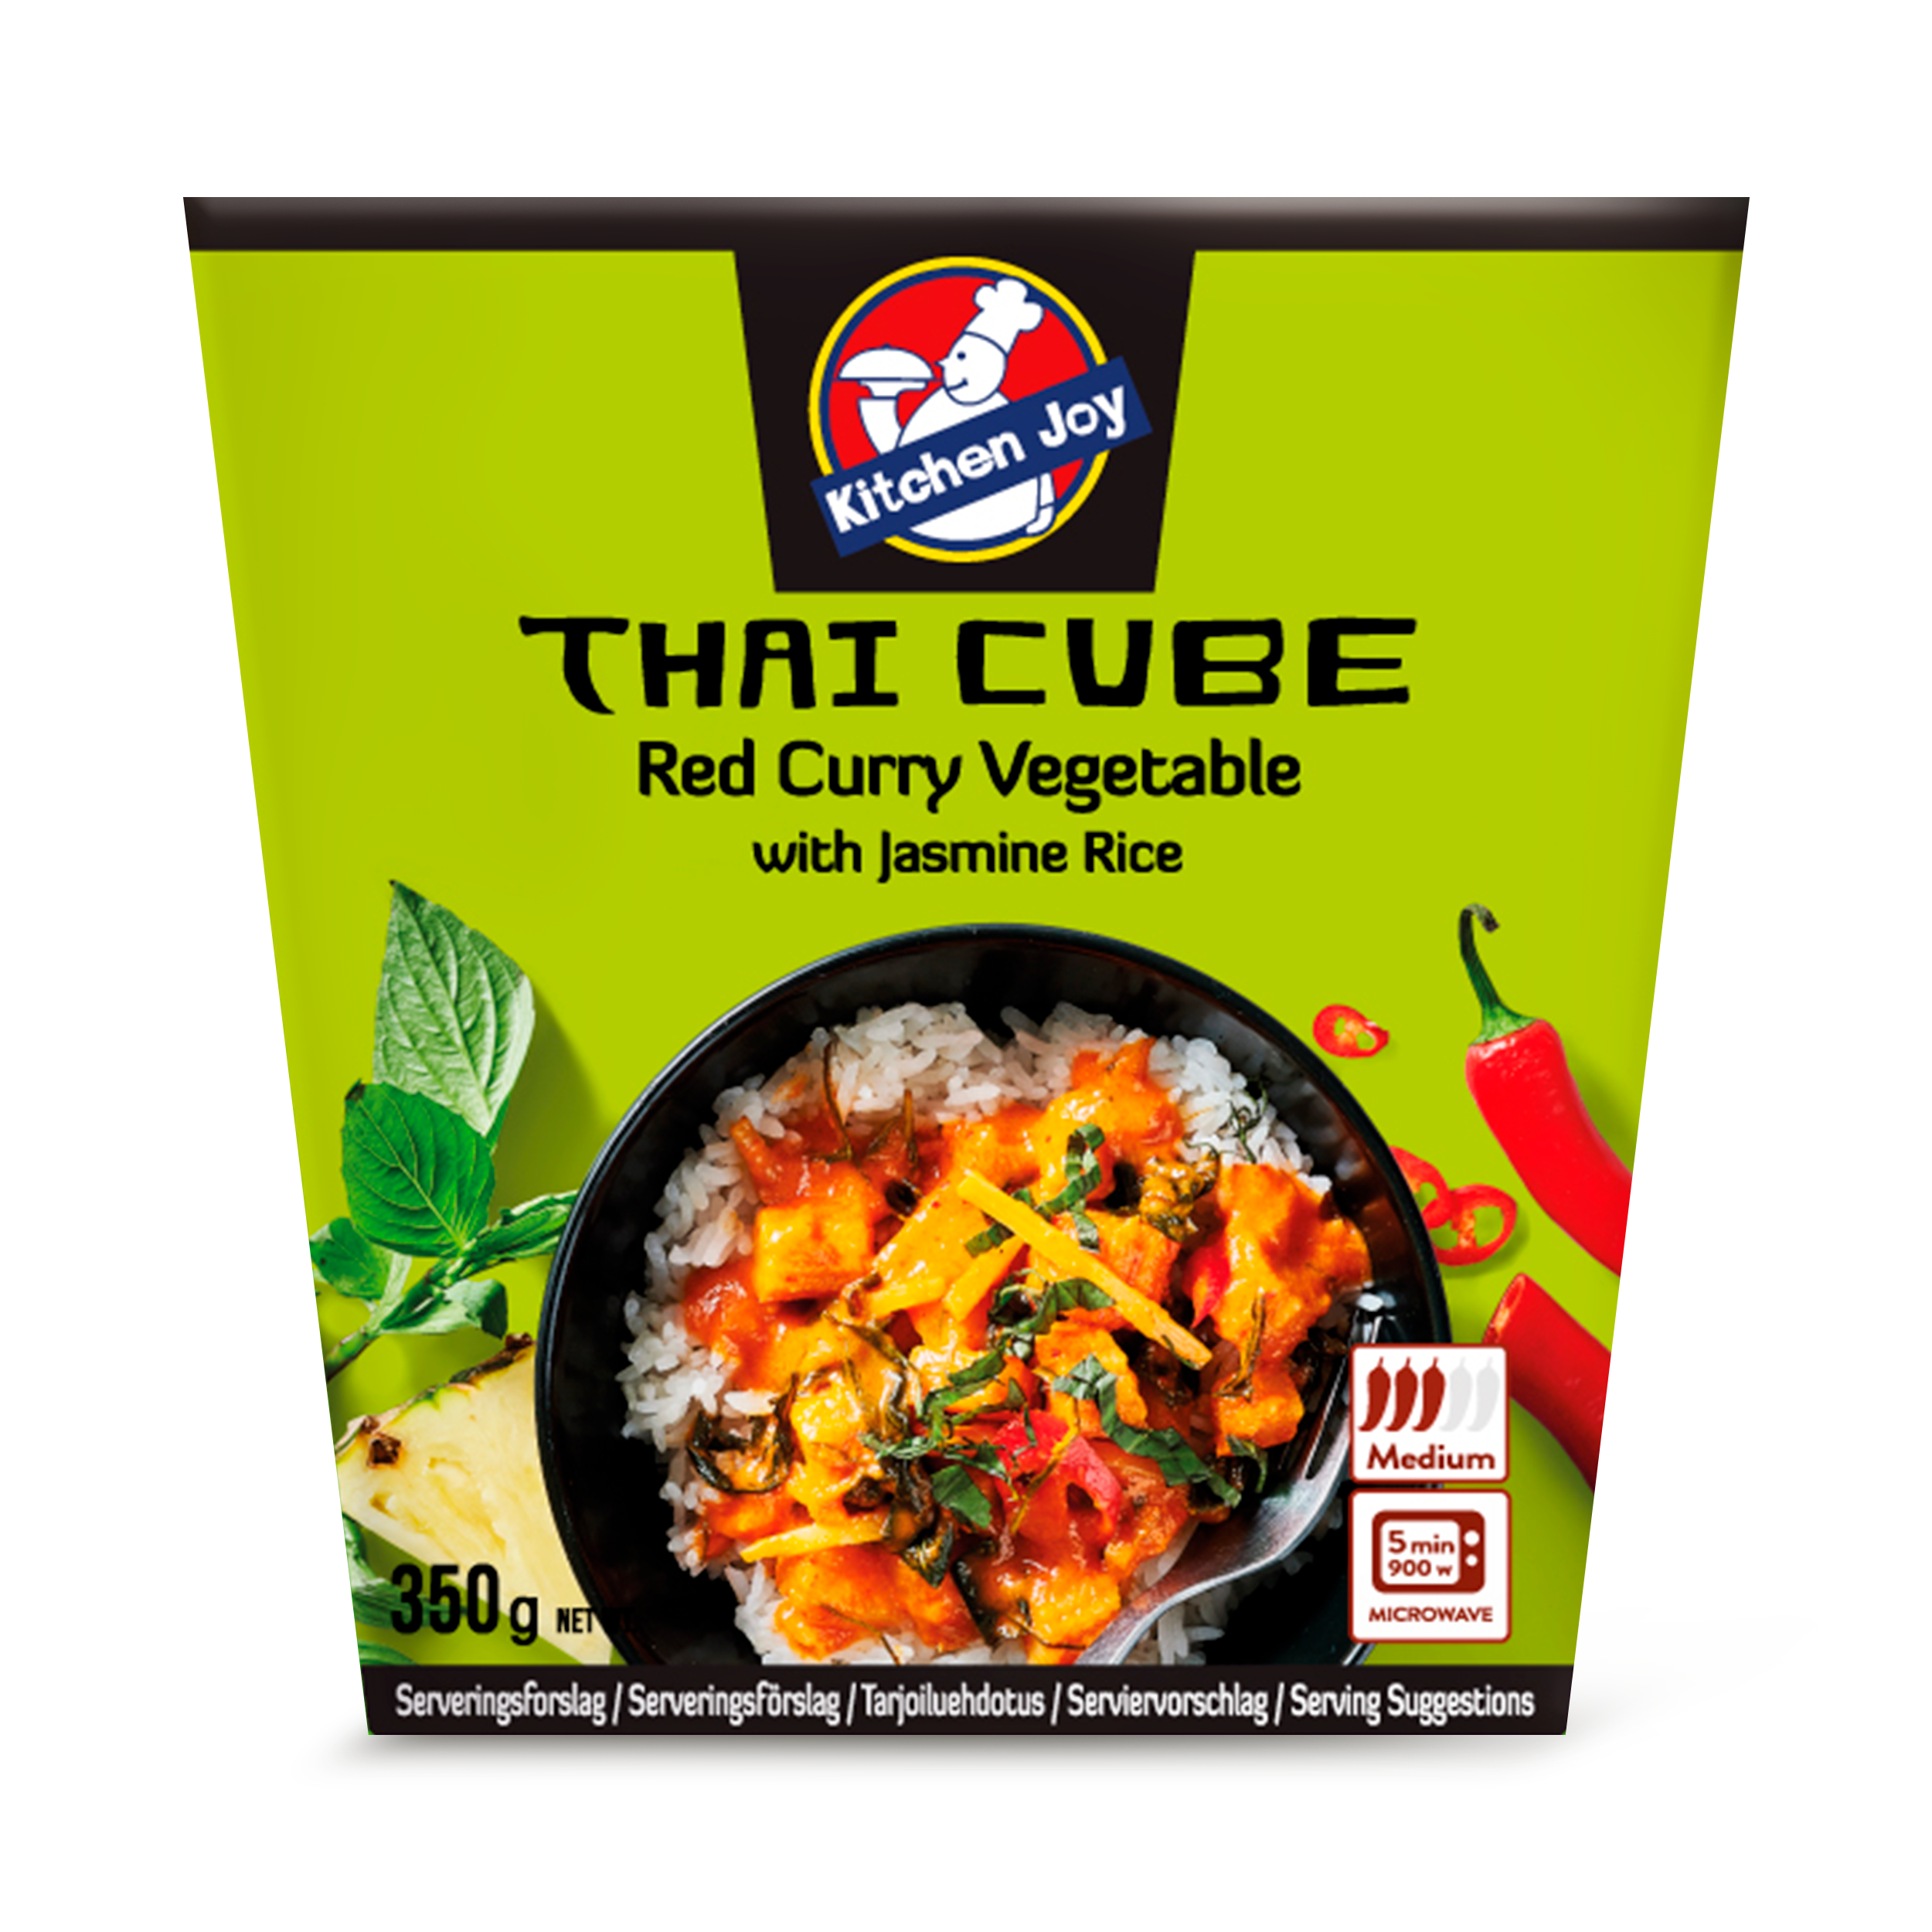 350g Kitchen Joy Thai-Cube Sweet Chili Chicken Teriyaki with Jasmine rice  frozen meal